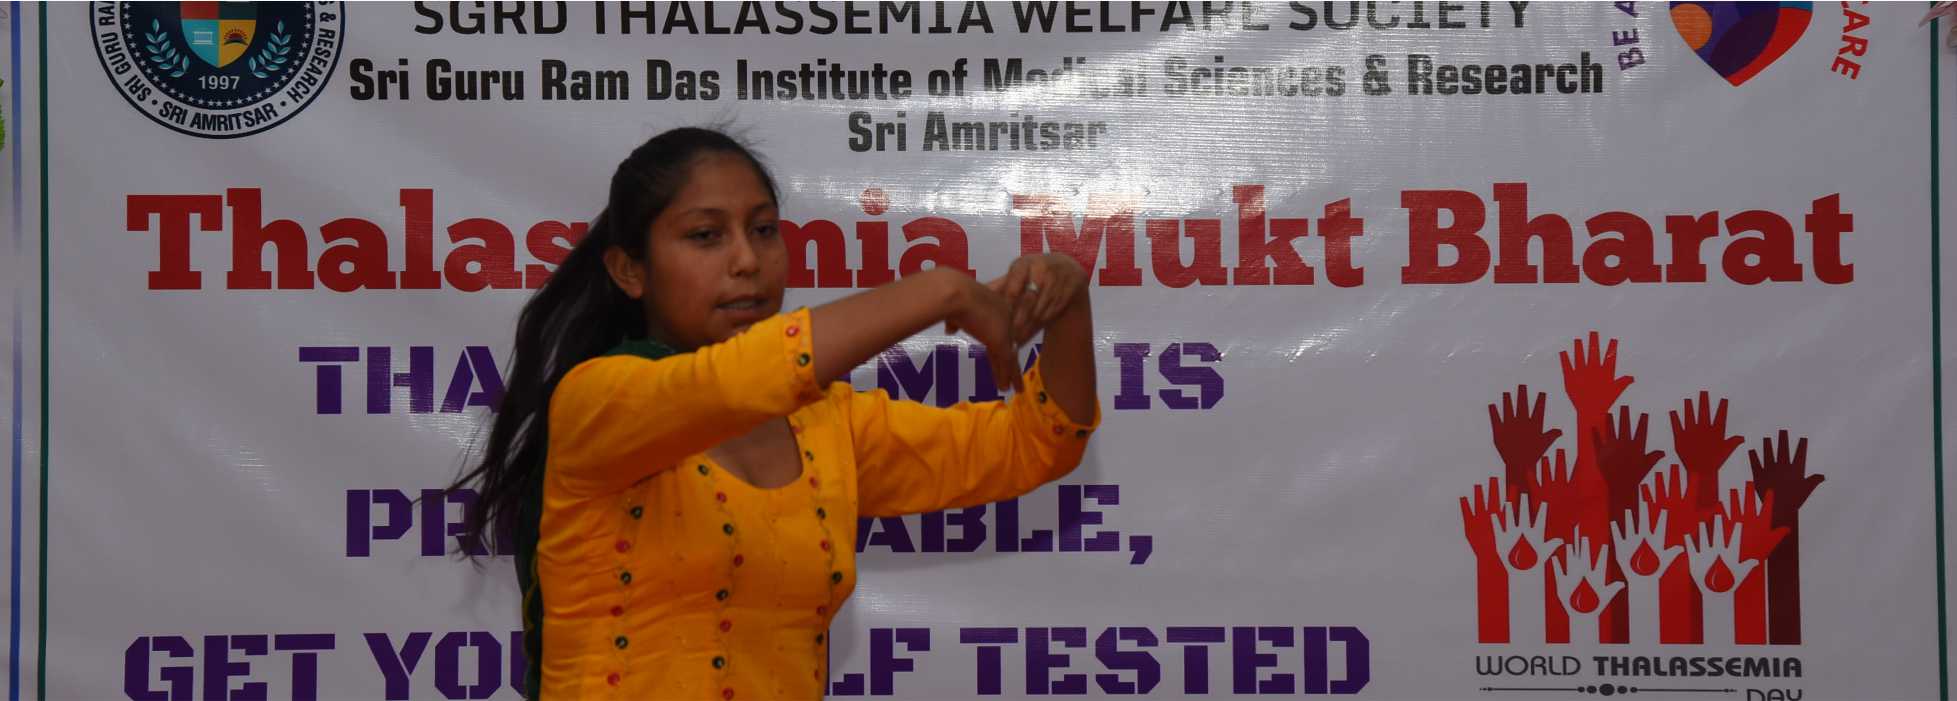 galimgs/Thalassemia Mukt Bharat Program Started/P - 49.jpg